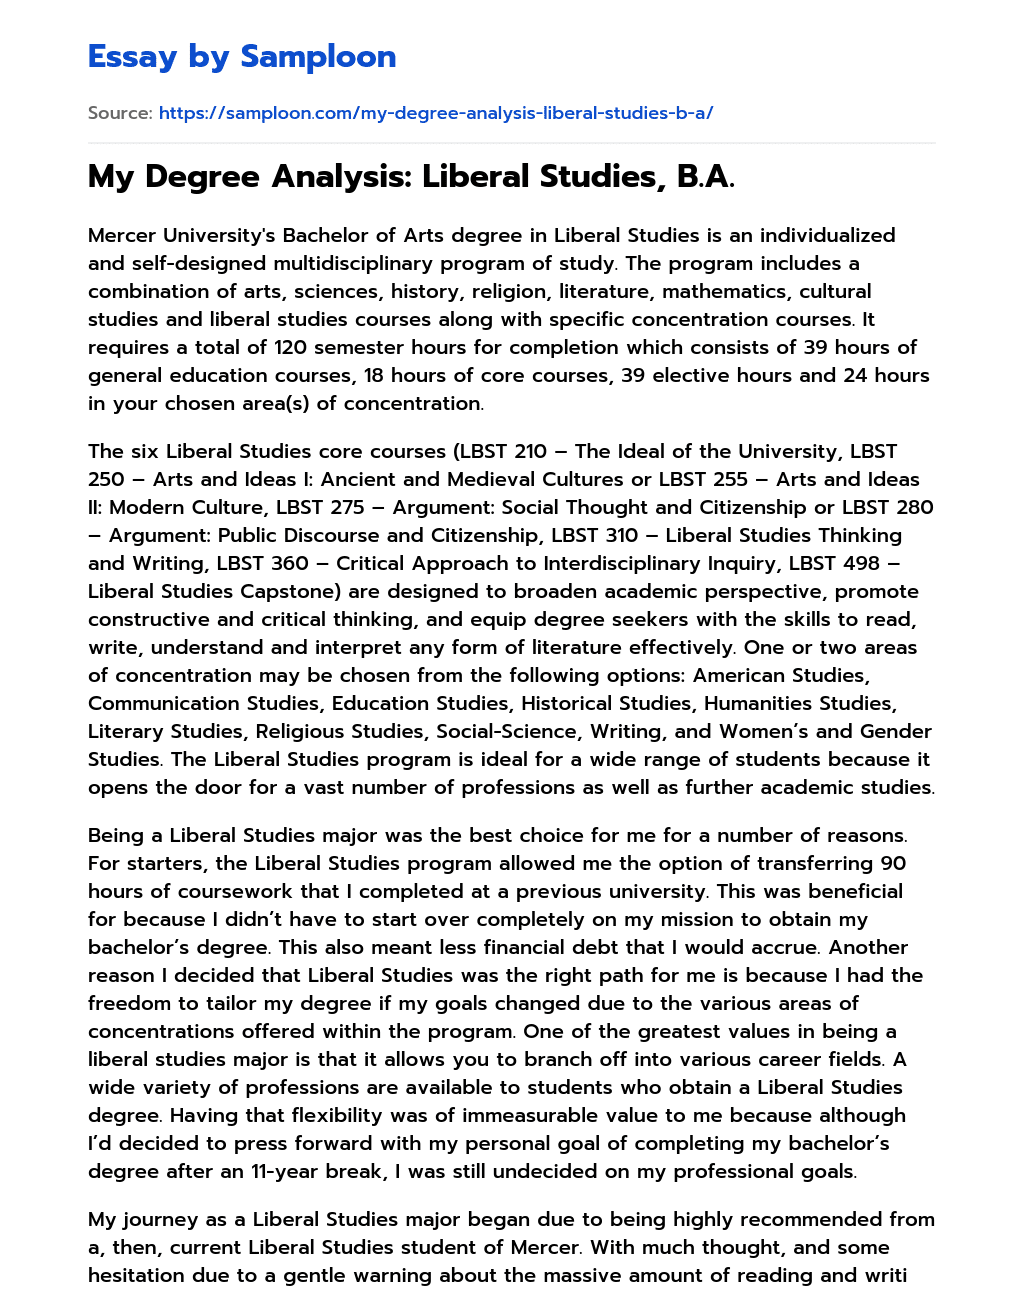 My Degree Analysis: Liberal Studies, B.A. essay